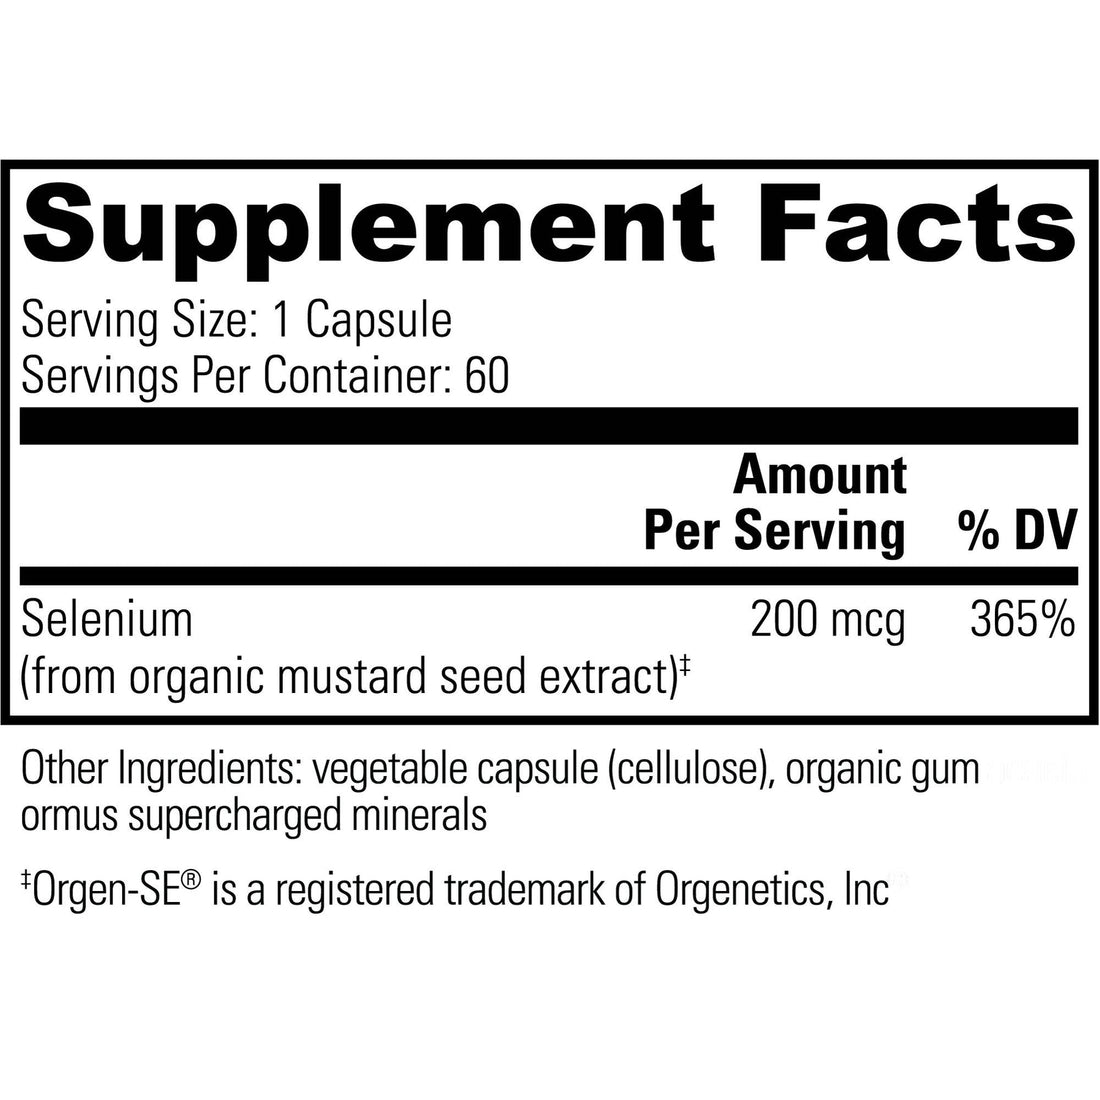 Organic Plant Based Selenium